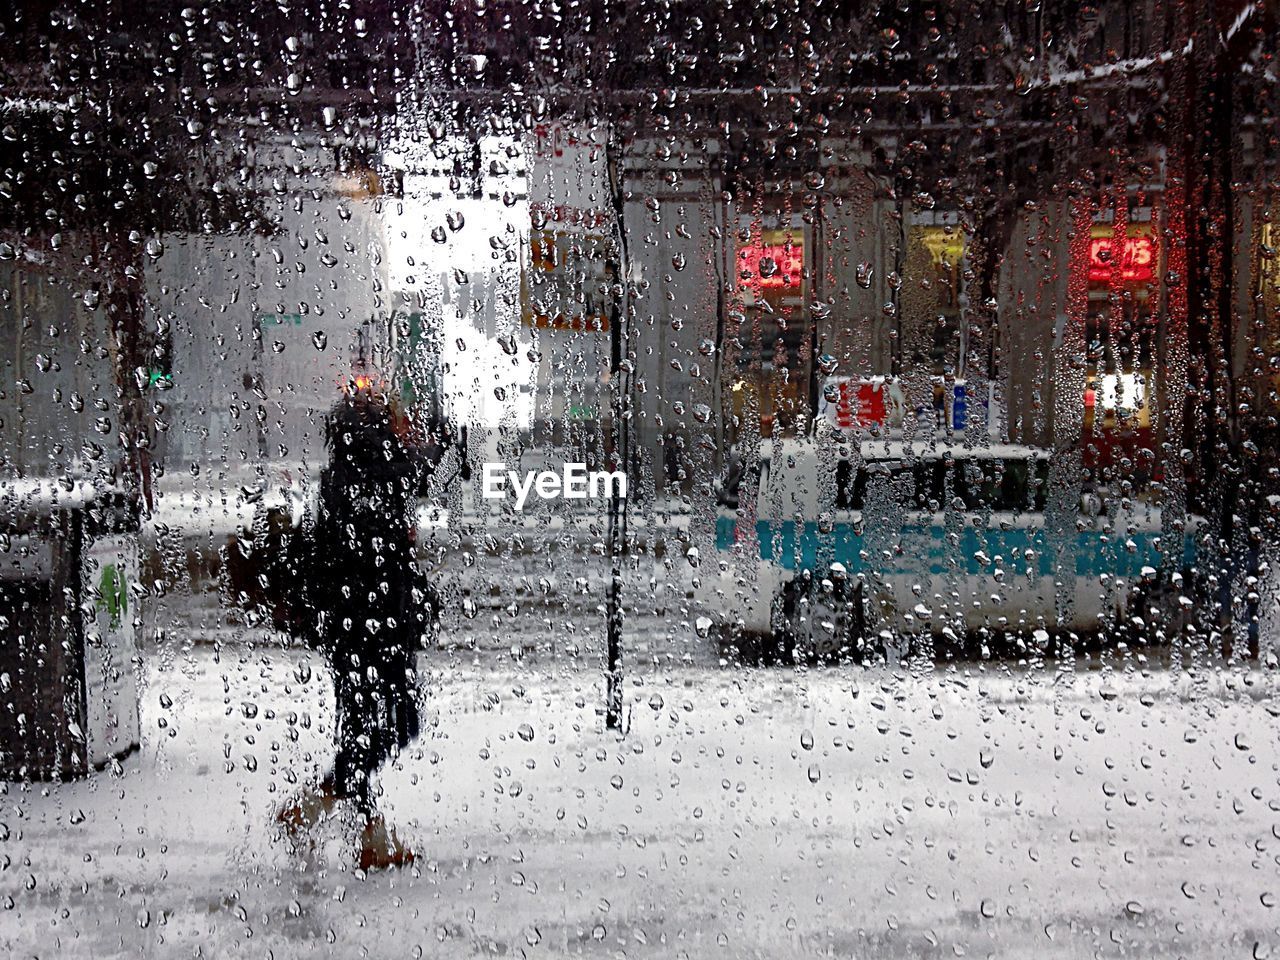 Woman walking on sidewalk during rainy season seen through wet glass window